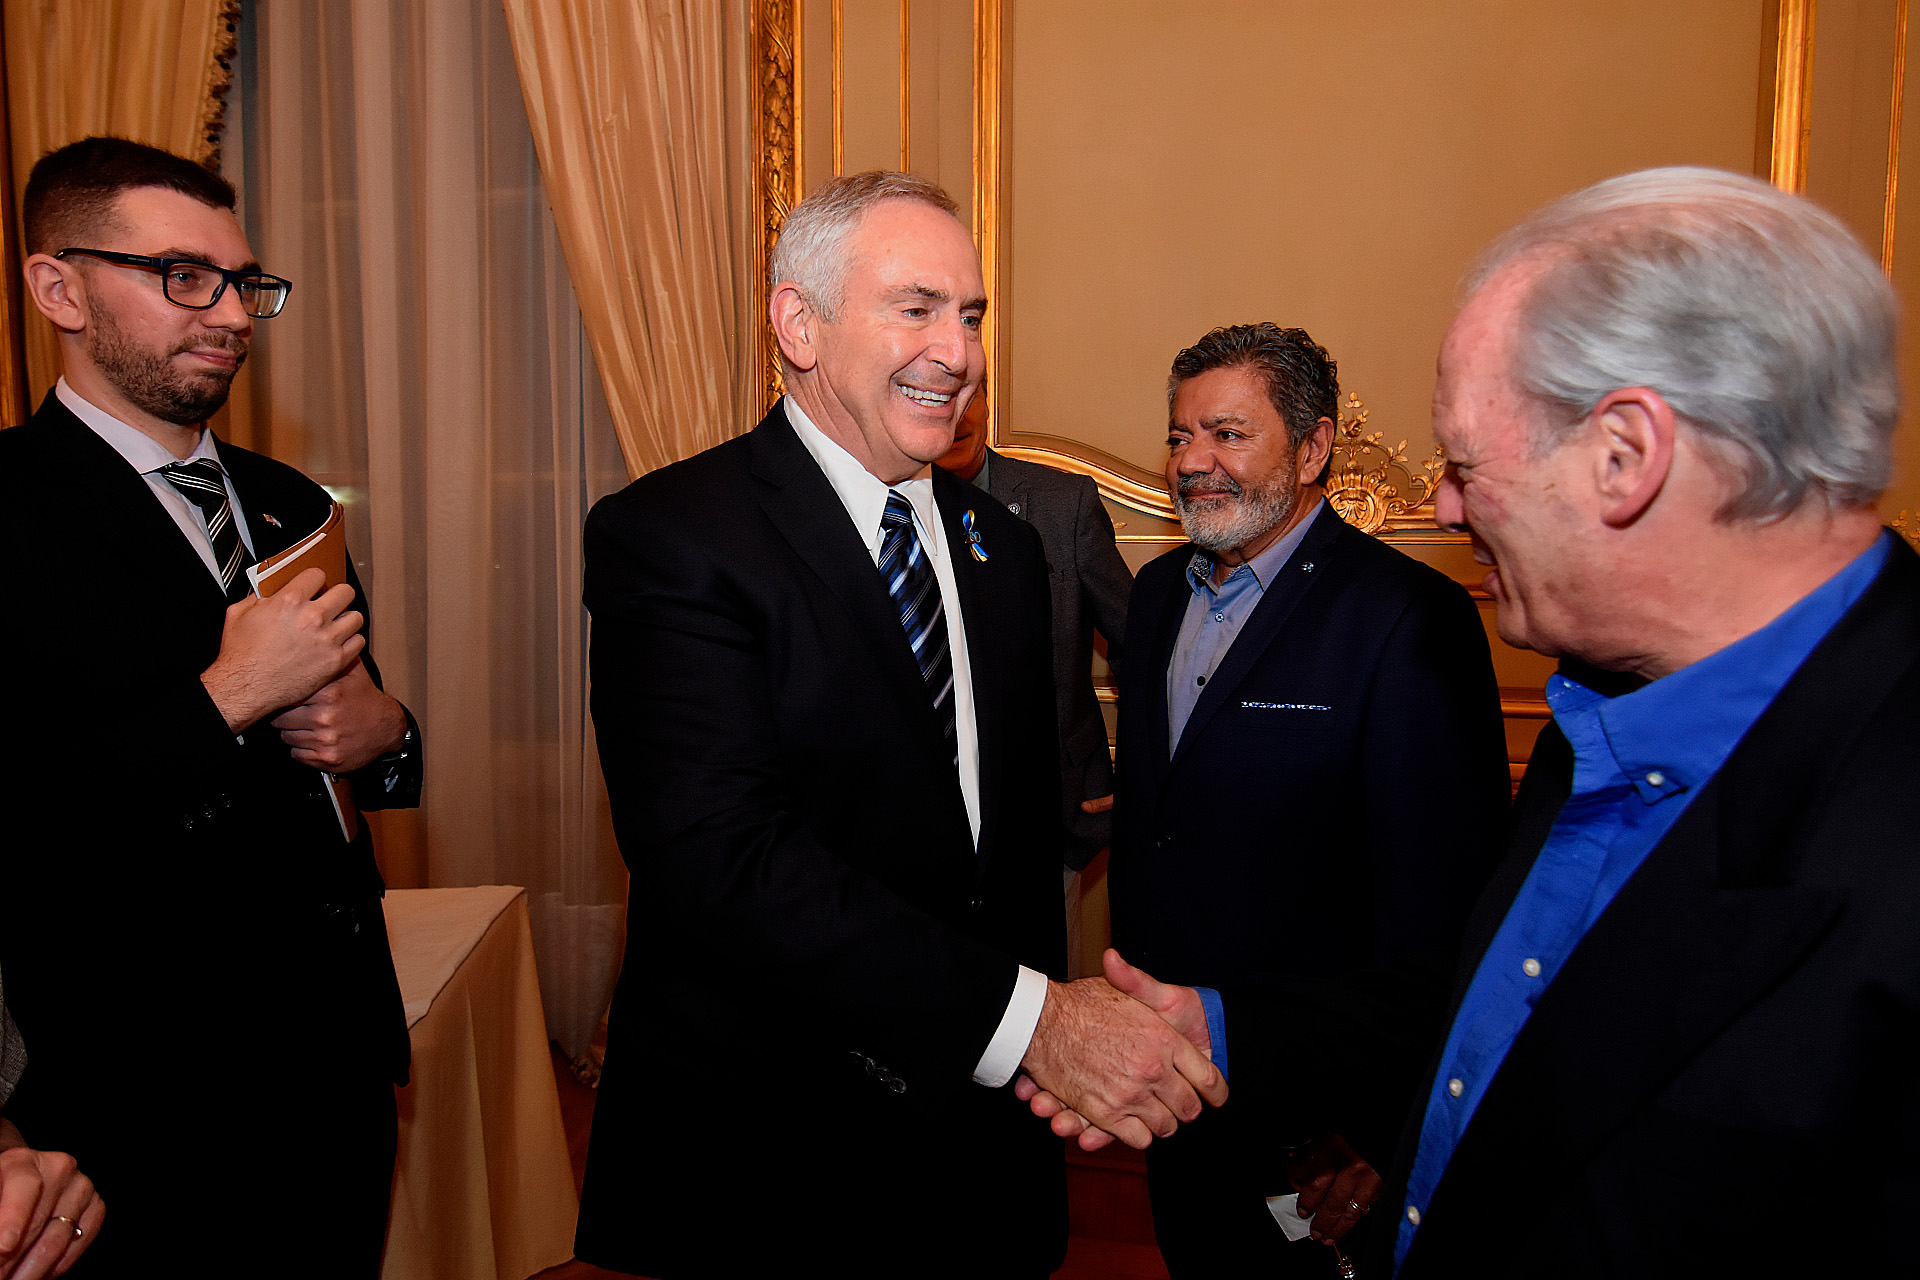 Ambassador Stanley together with Andrés Rodríguez, from UPCN, and Gerardo Martínez, from UOCRA